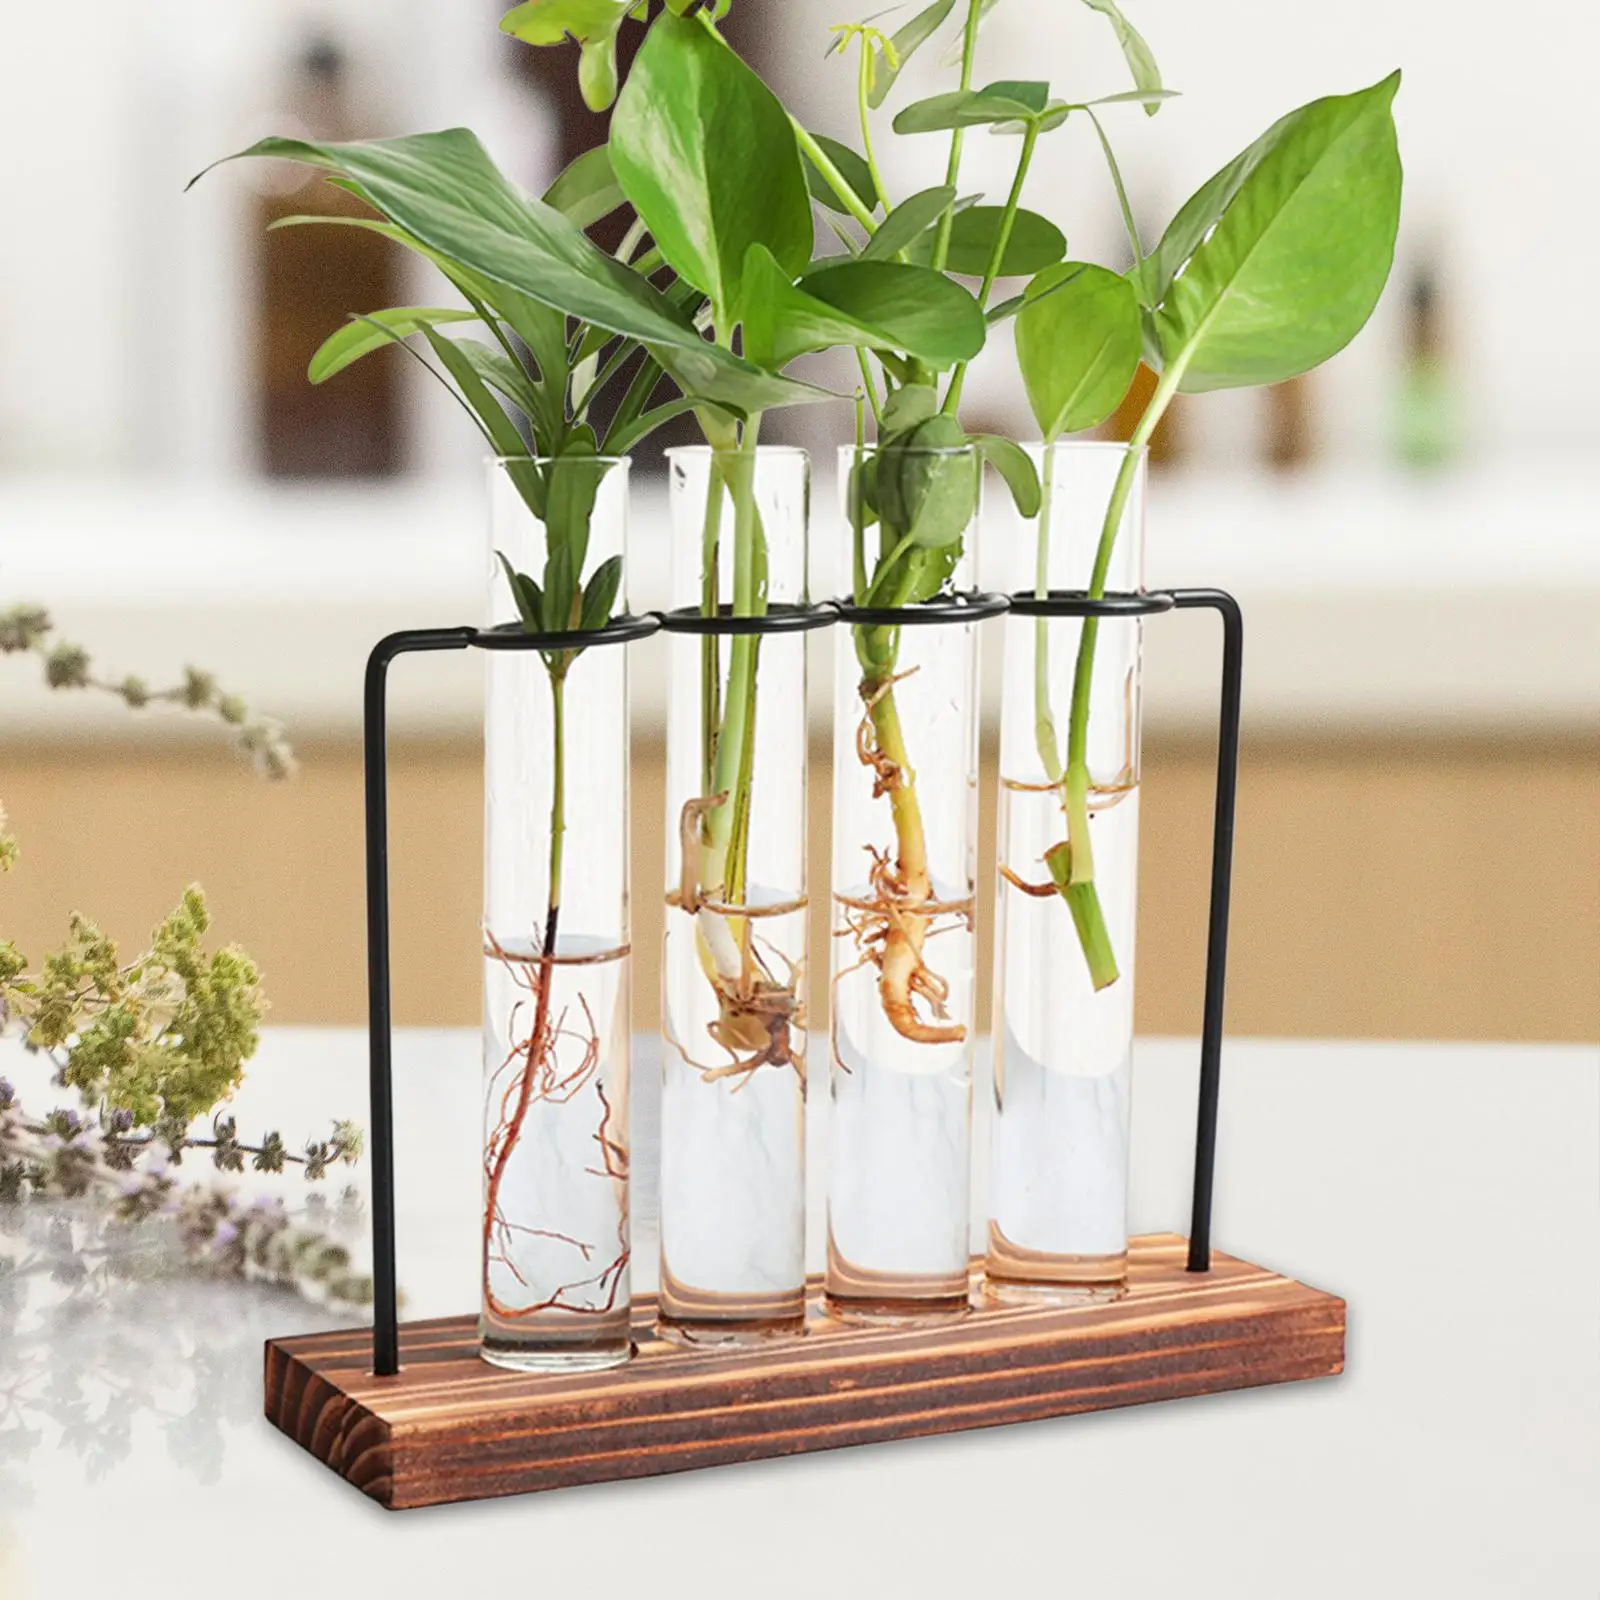 Test Tube Vase for Flowers Wooden Base Plant Vase Table Centerpiece Terrarium for Indoor Wedding Office Desktop Home Decor